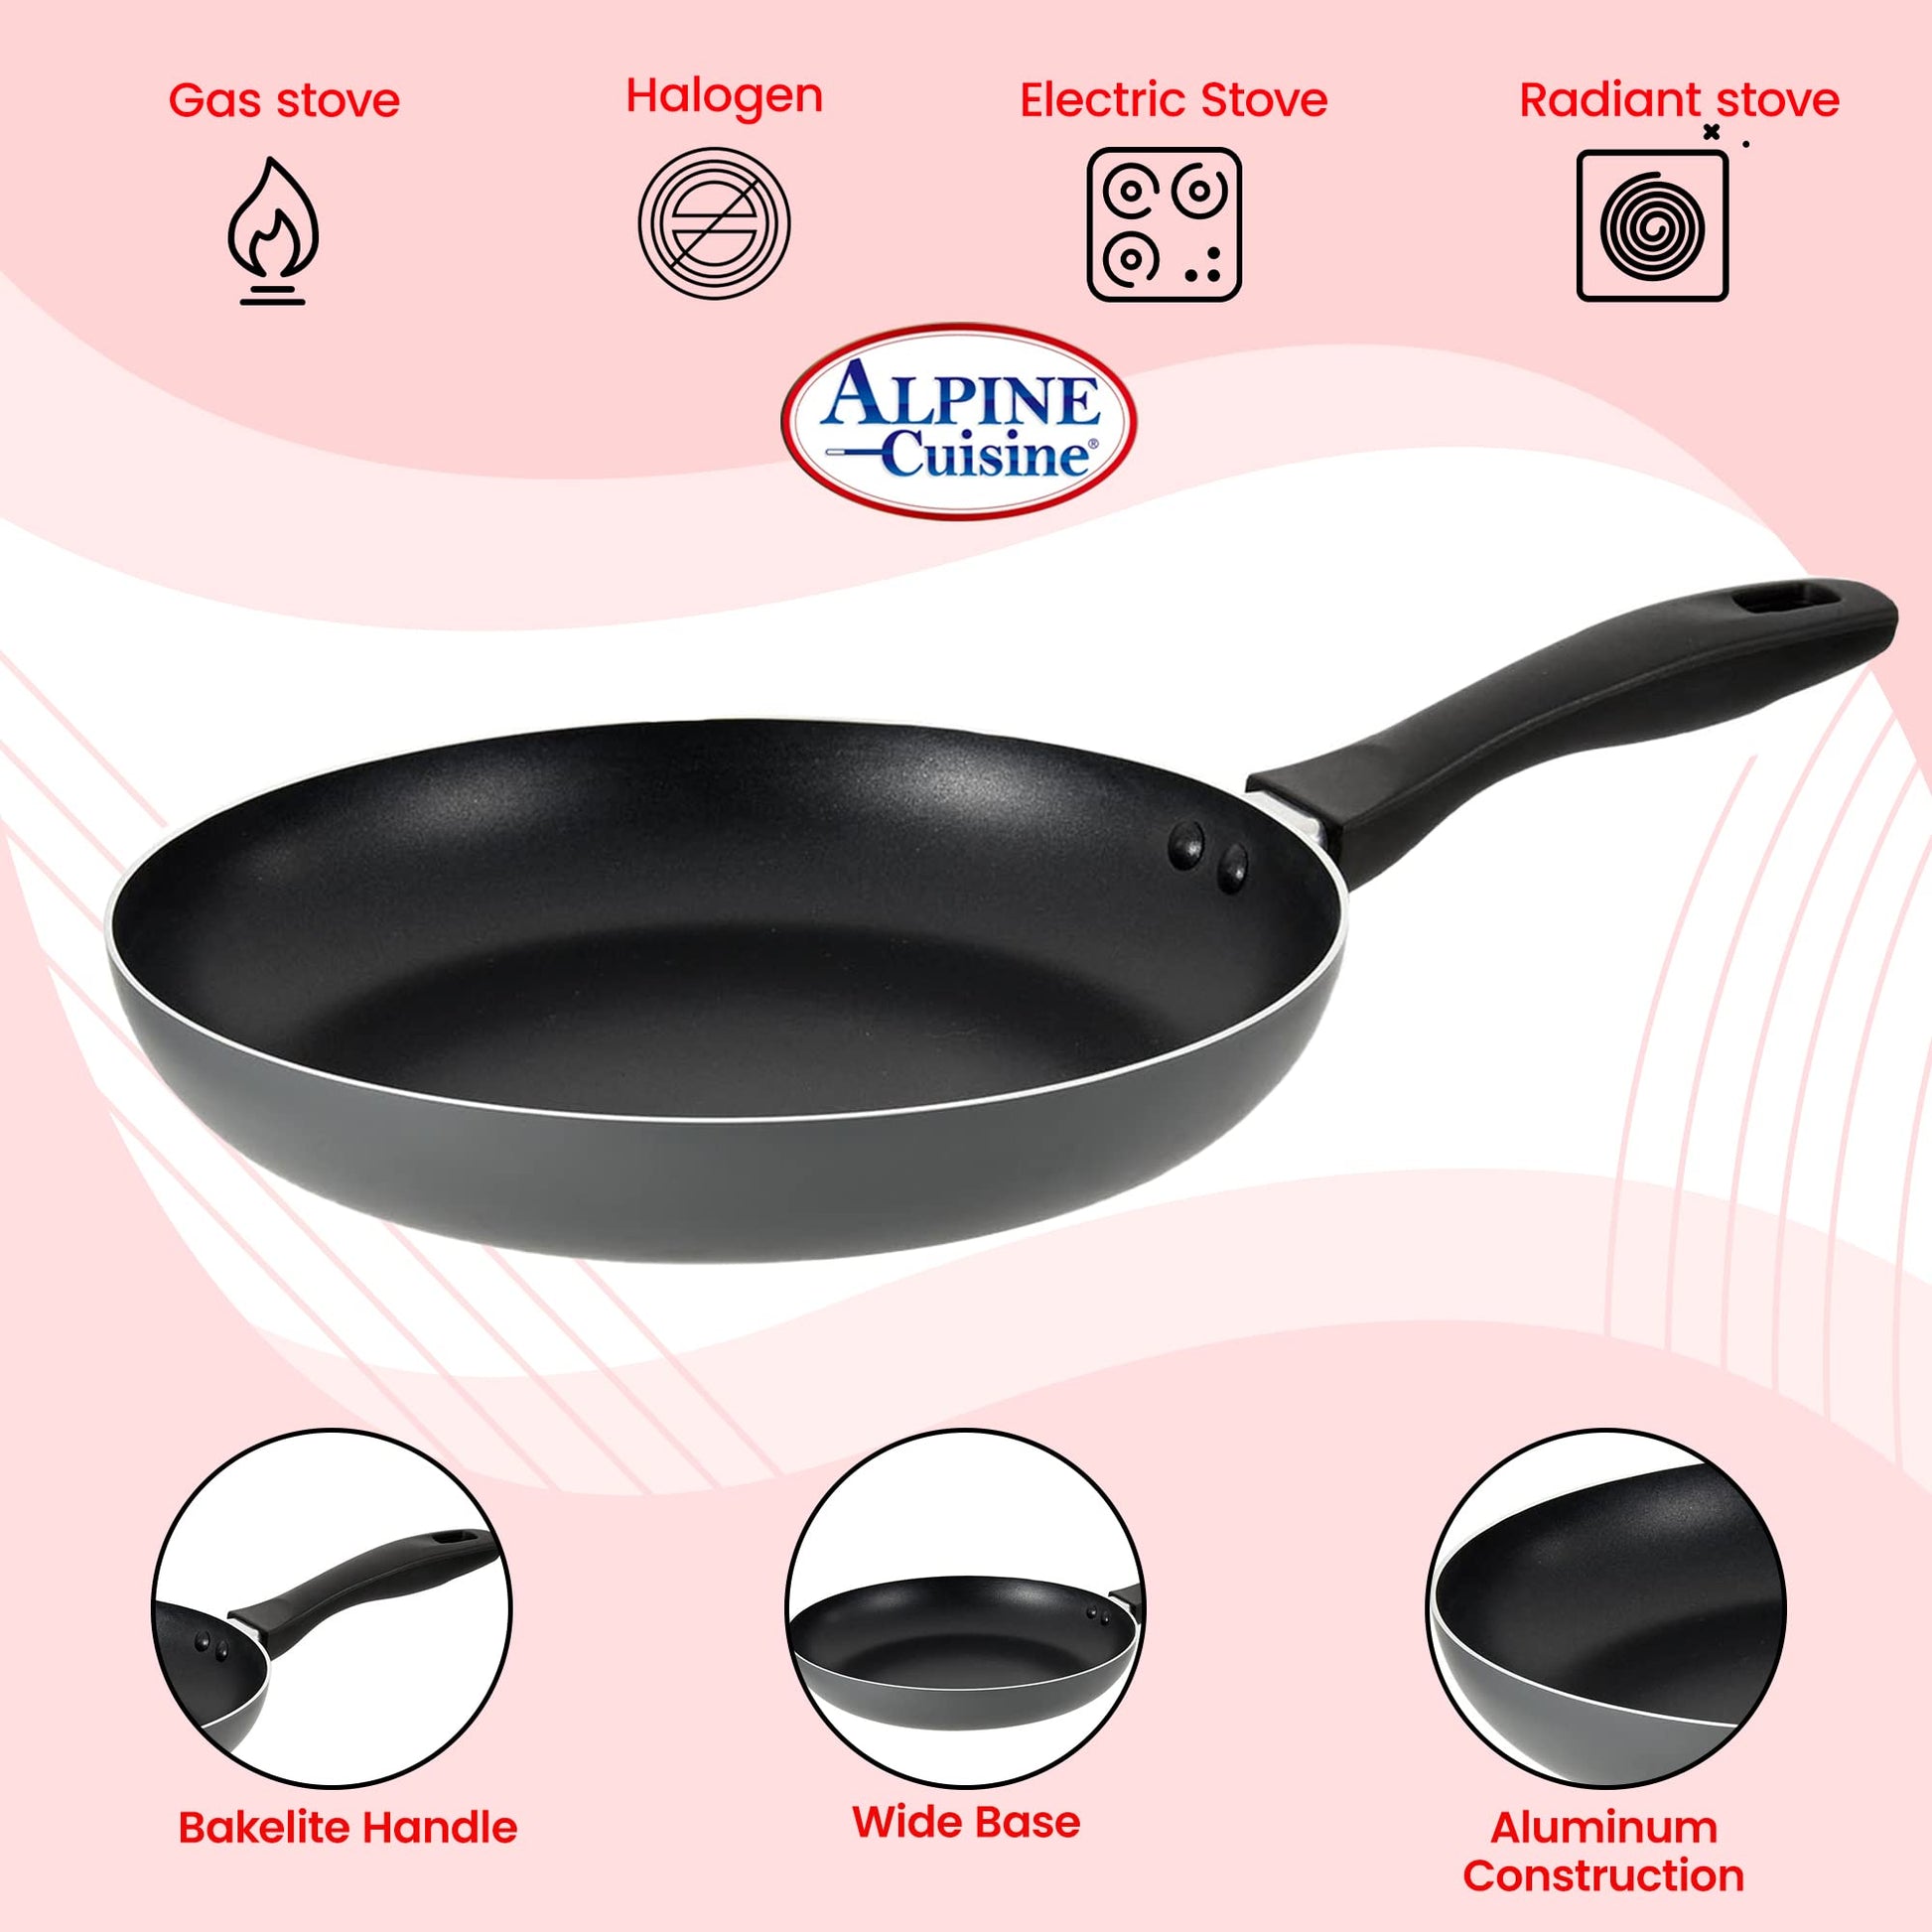 Alpine™ Fry Pan